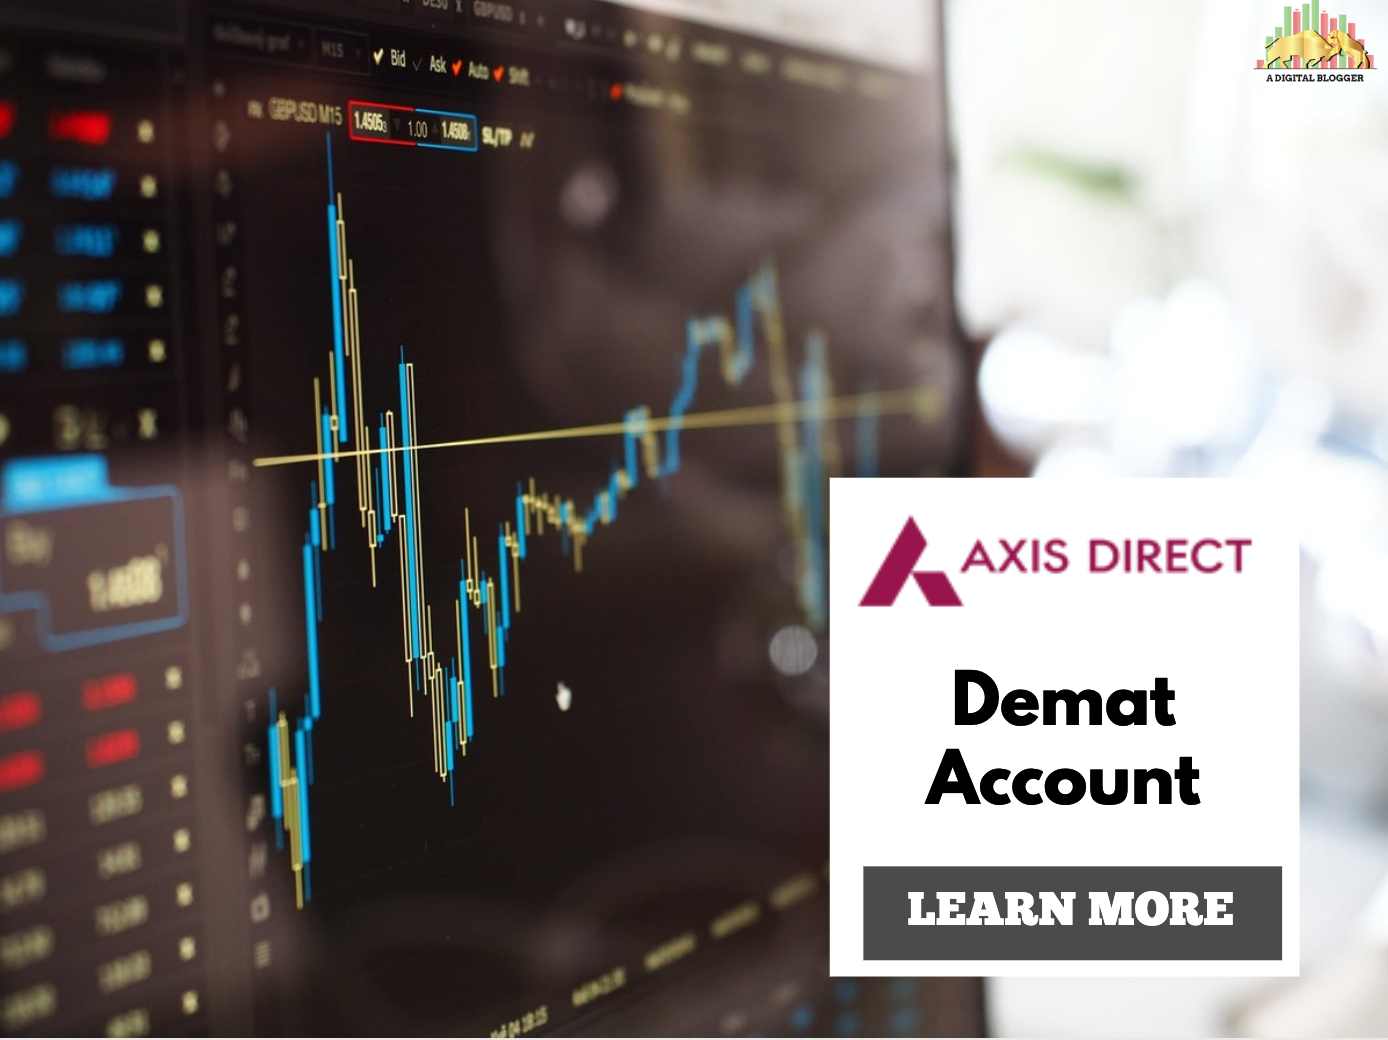 Axis Demat Account | Review, Brokerage, Fees, Closure, Process